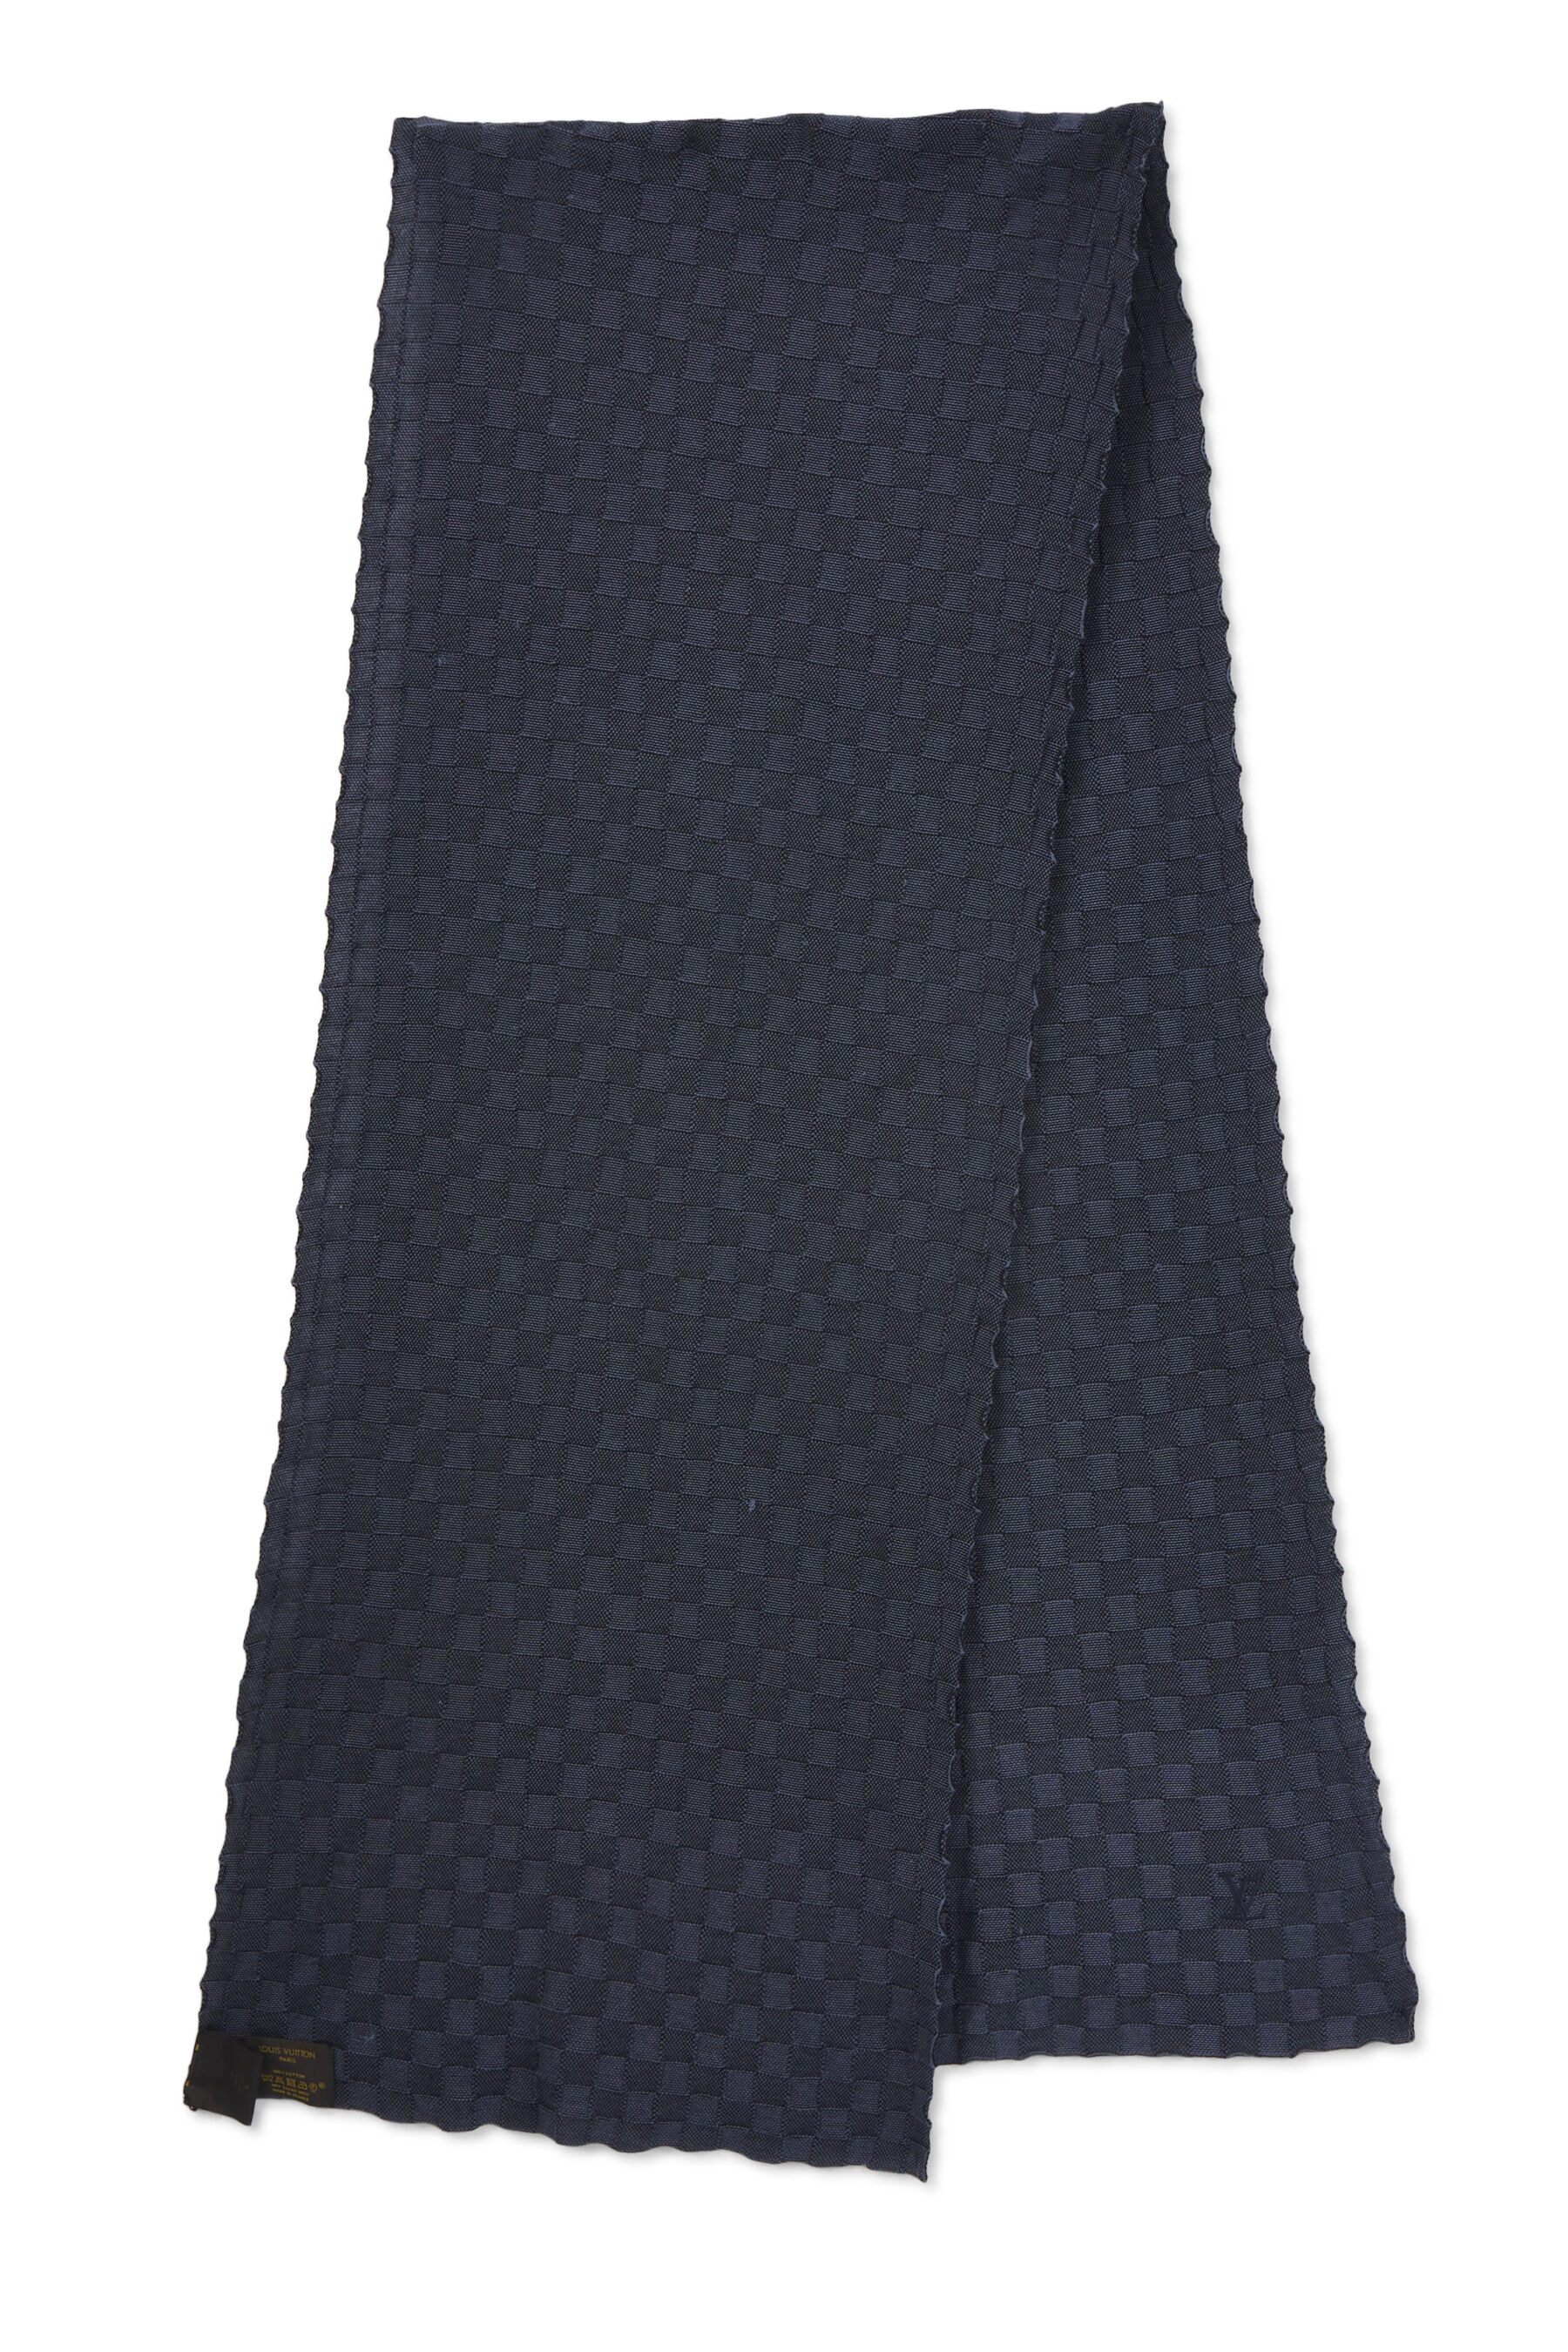 Louis Vuitton Blue Checked Pattern Cotton & Cashmere Micro Damier Scarf